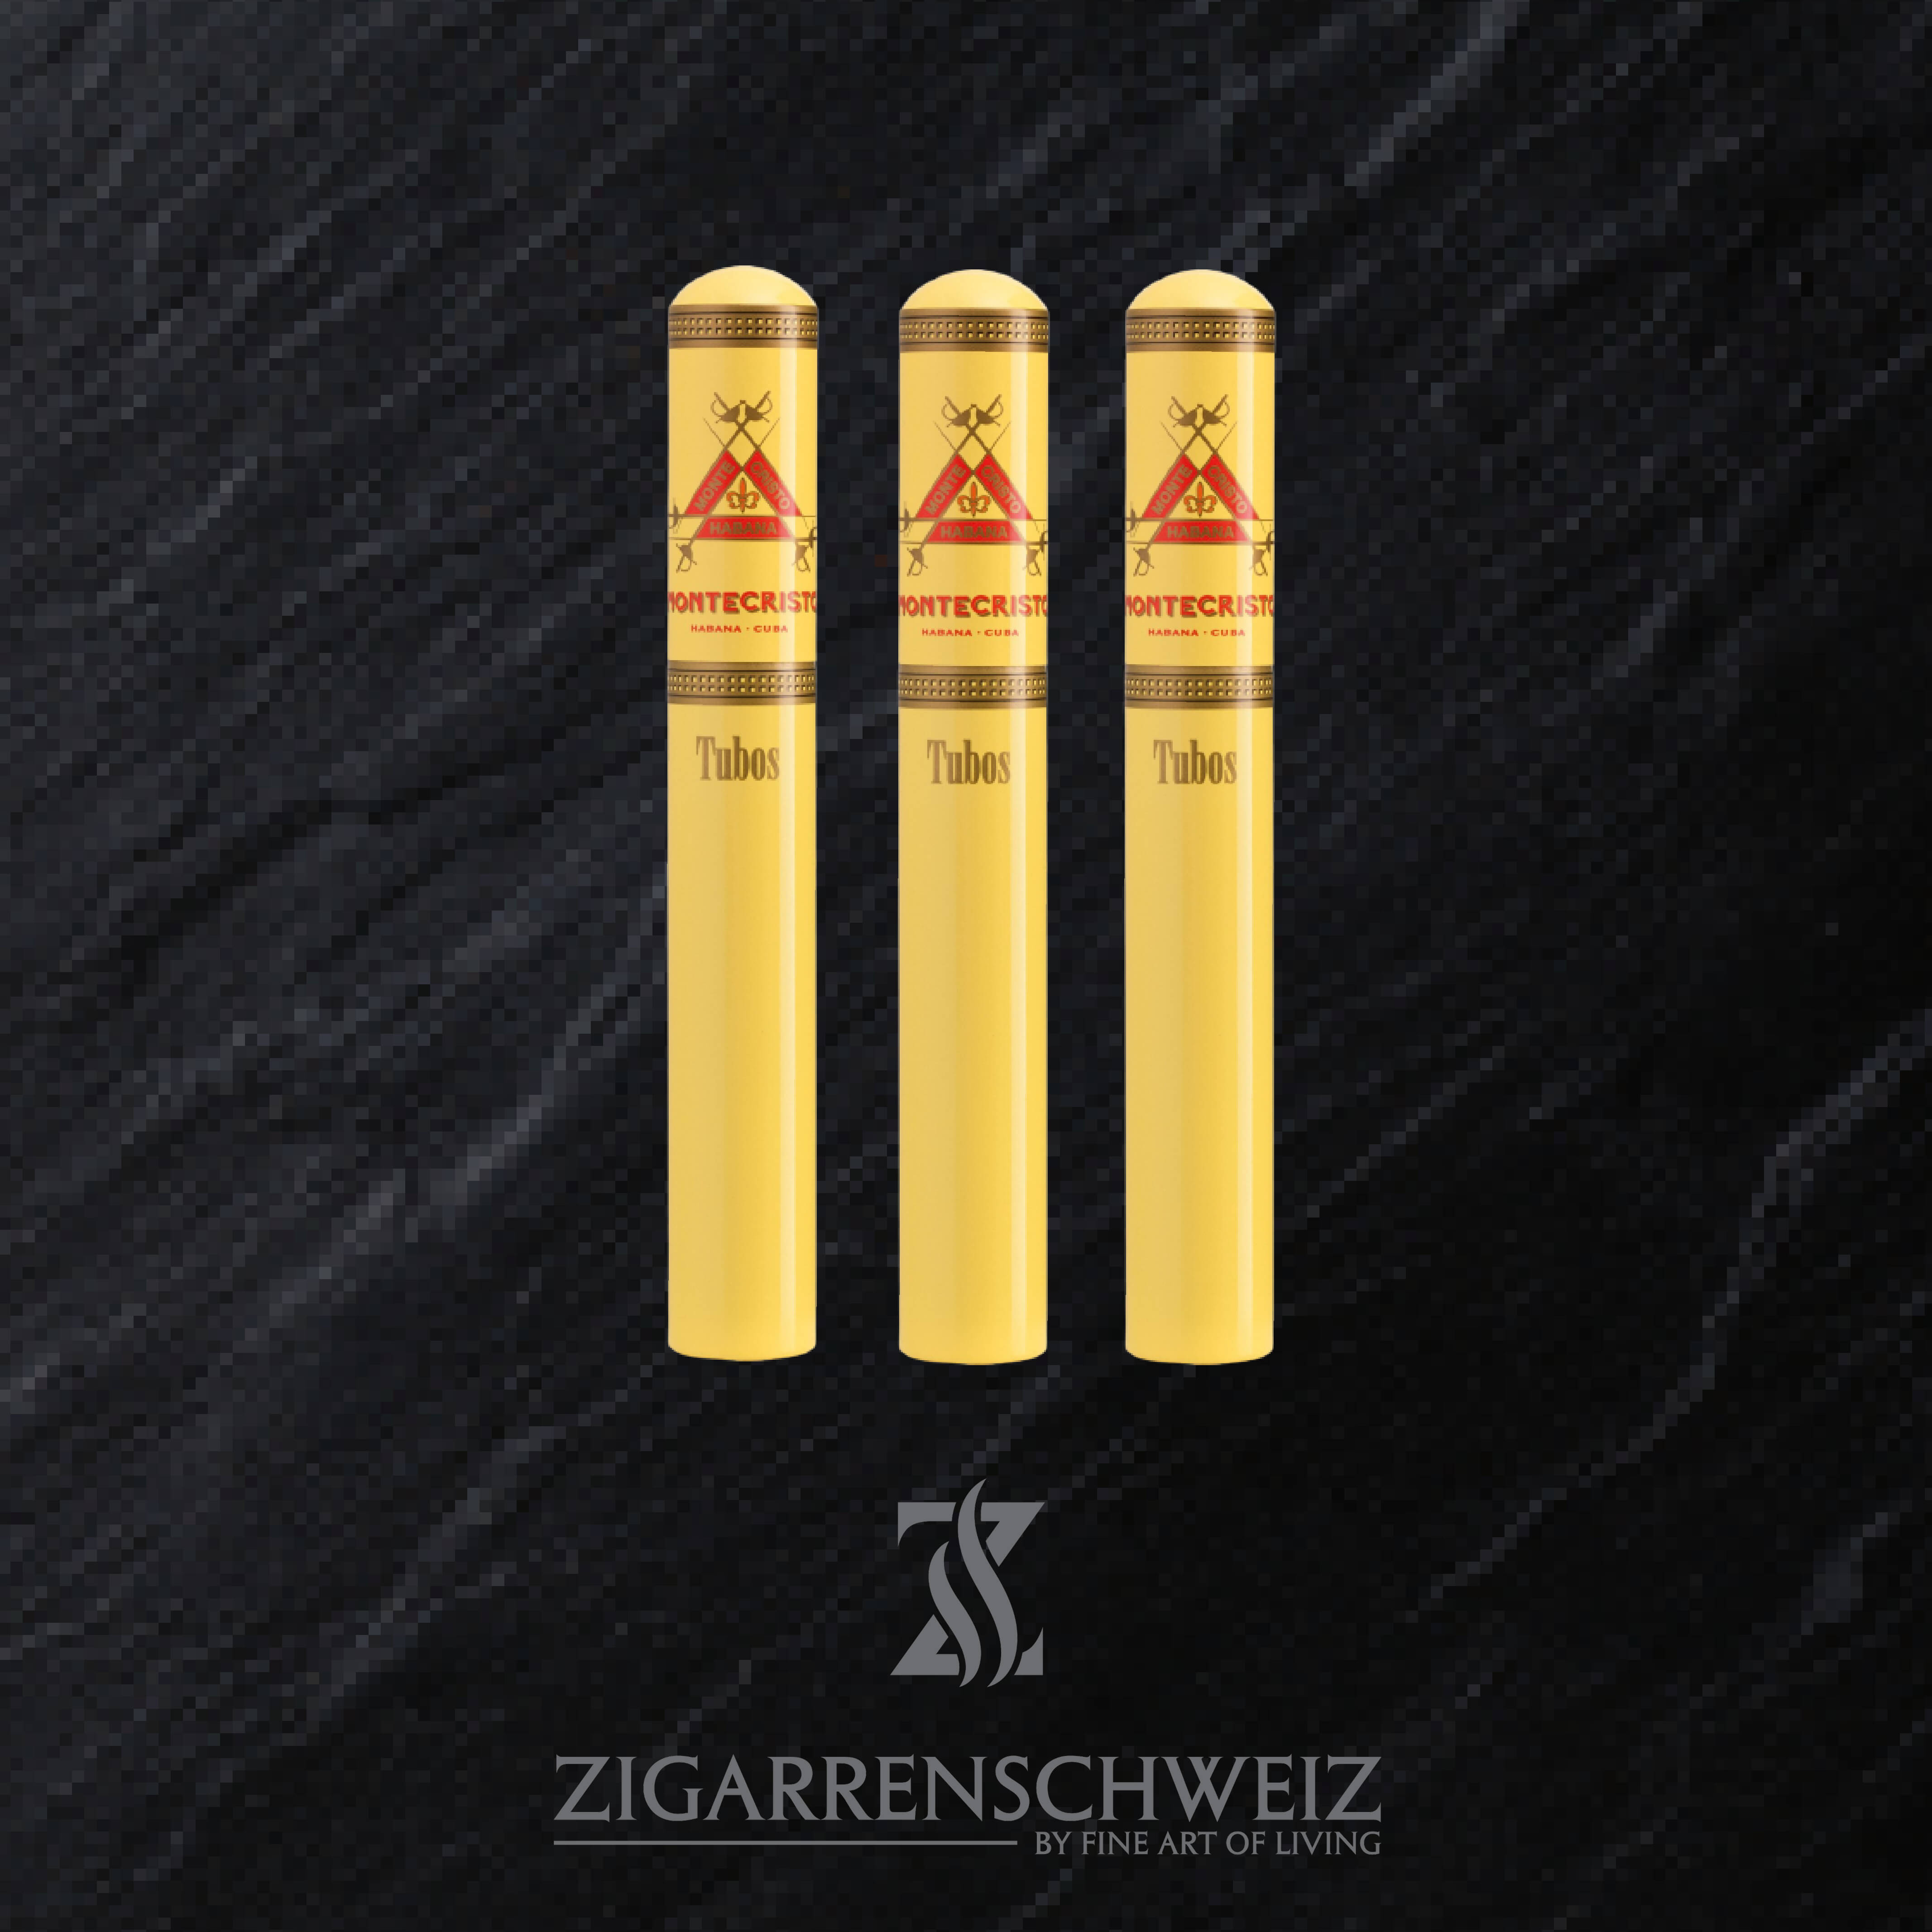 3er Etui Montecristo Tubos Zigarren aus Kuba